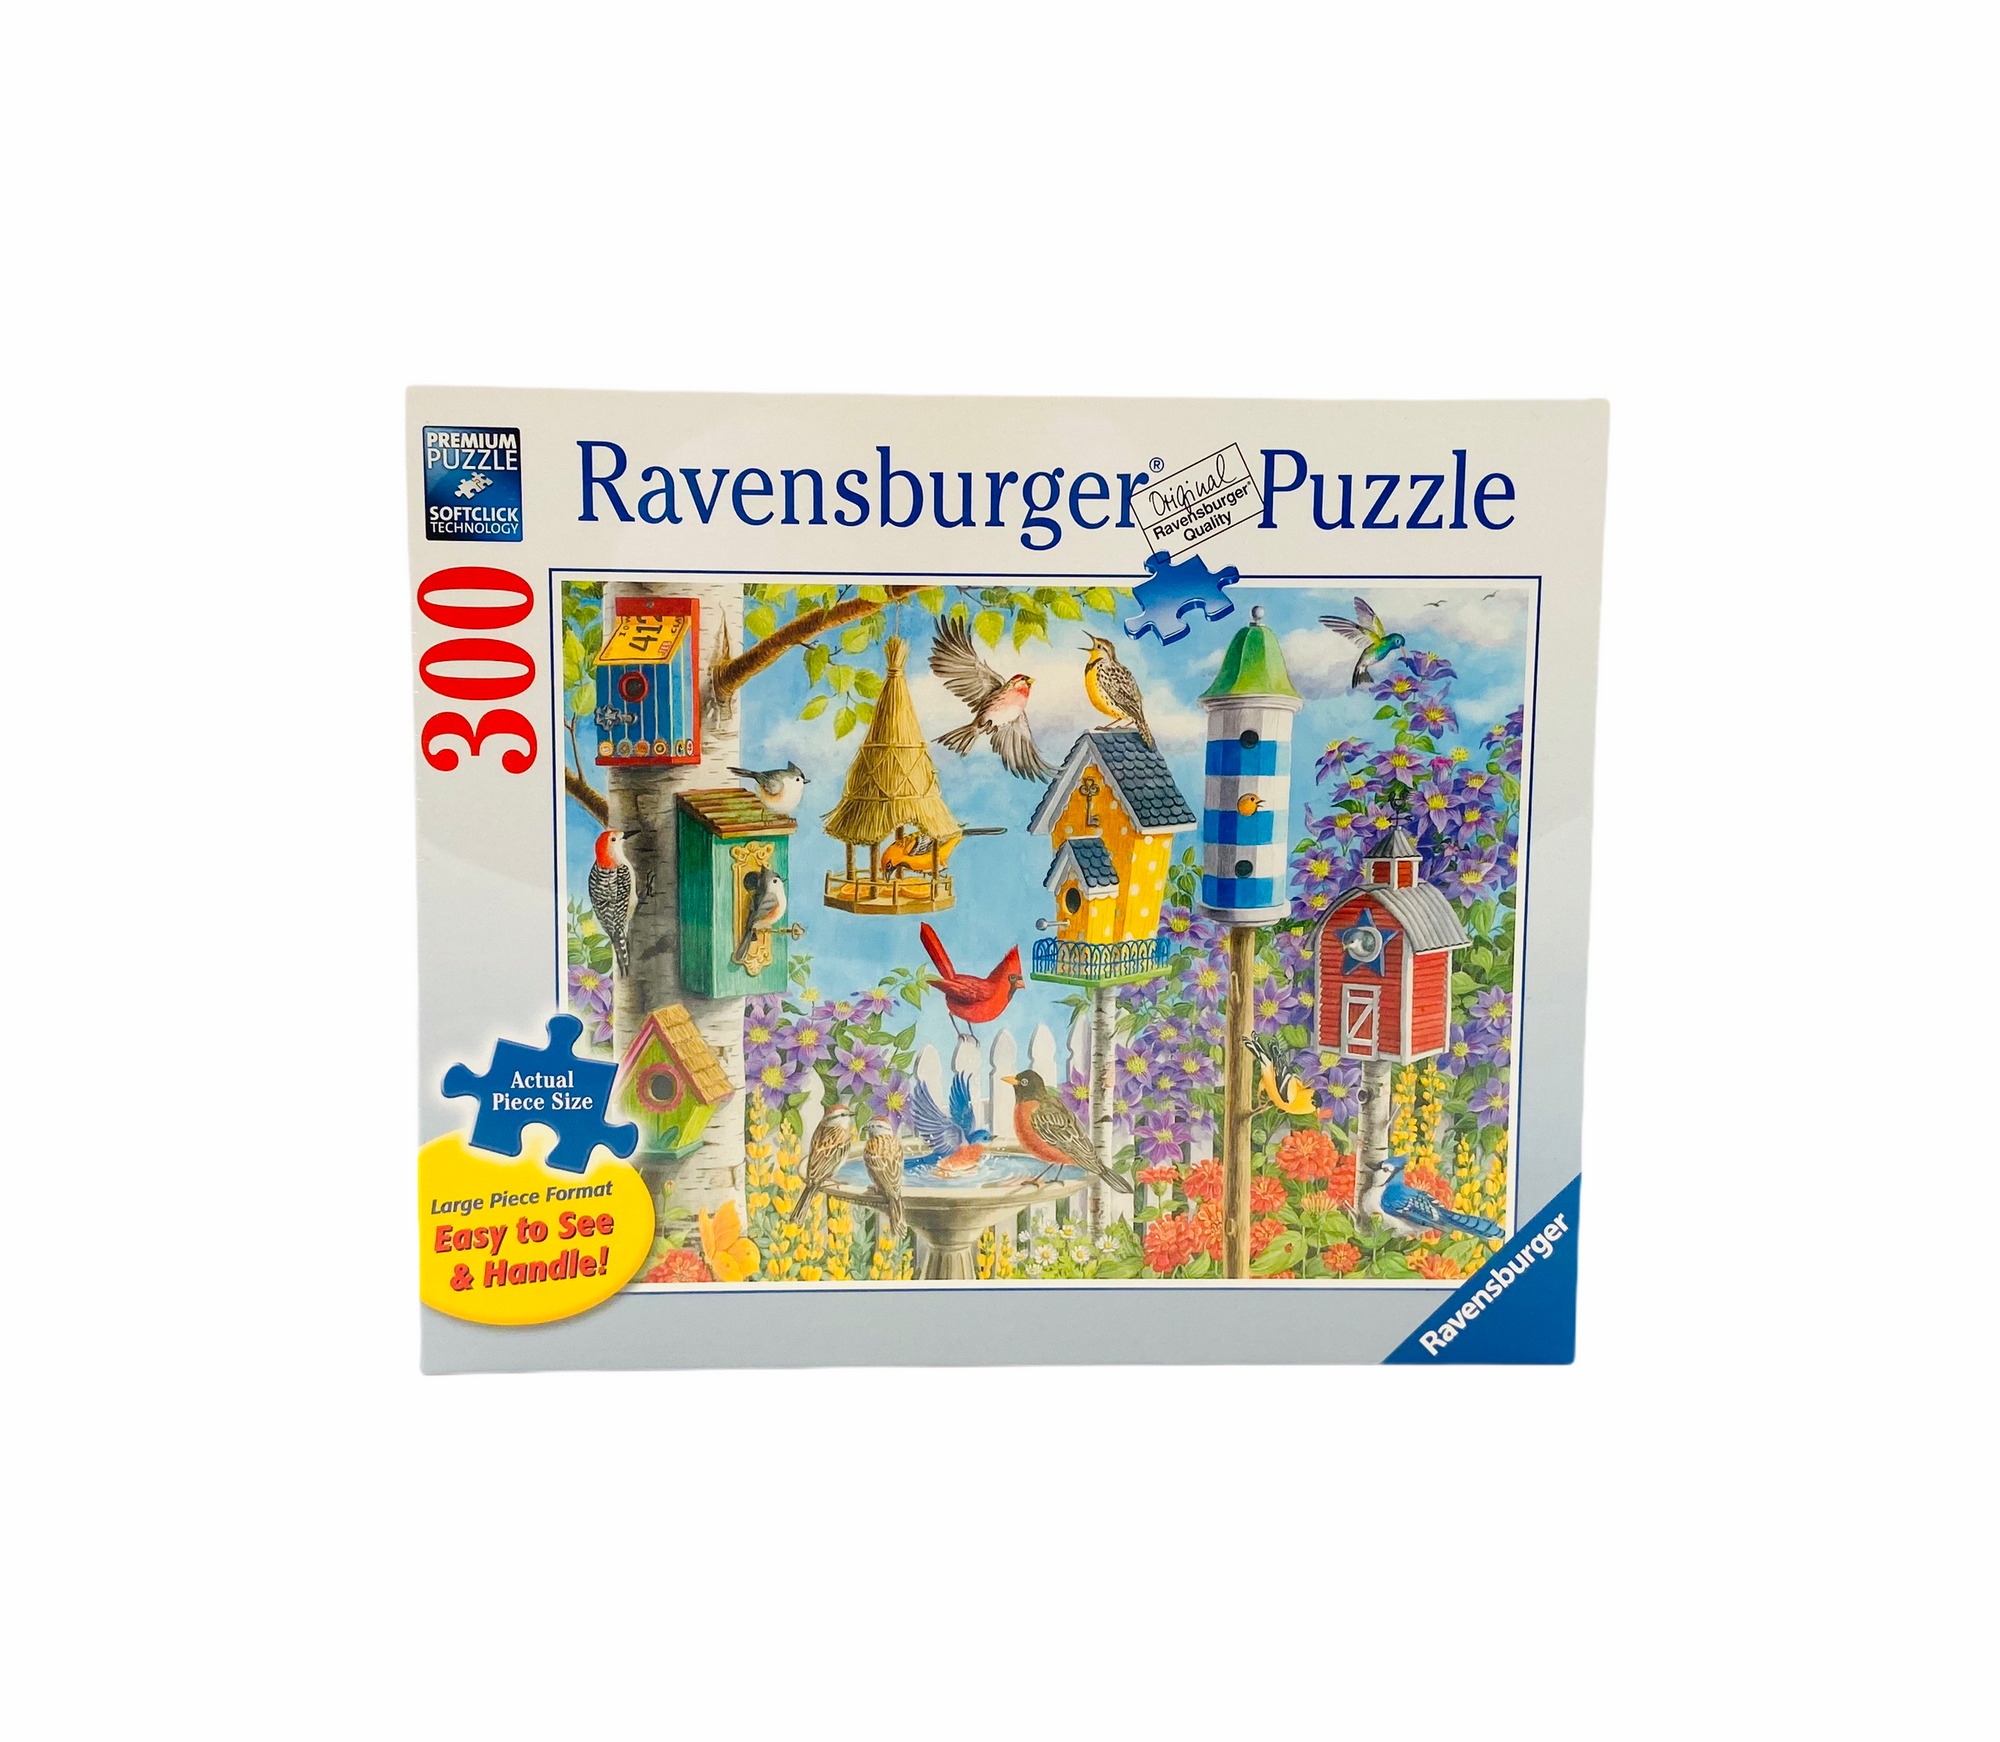 Ravensburger Puzzle - Home Tweet Home large format 300 piece set